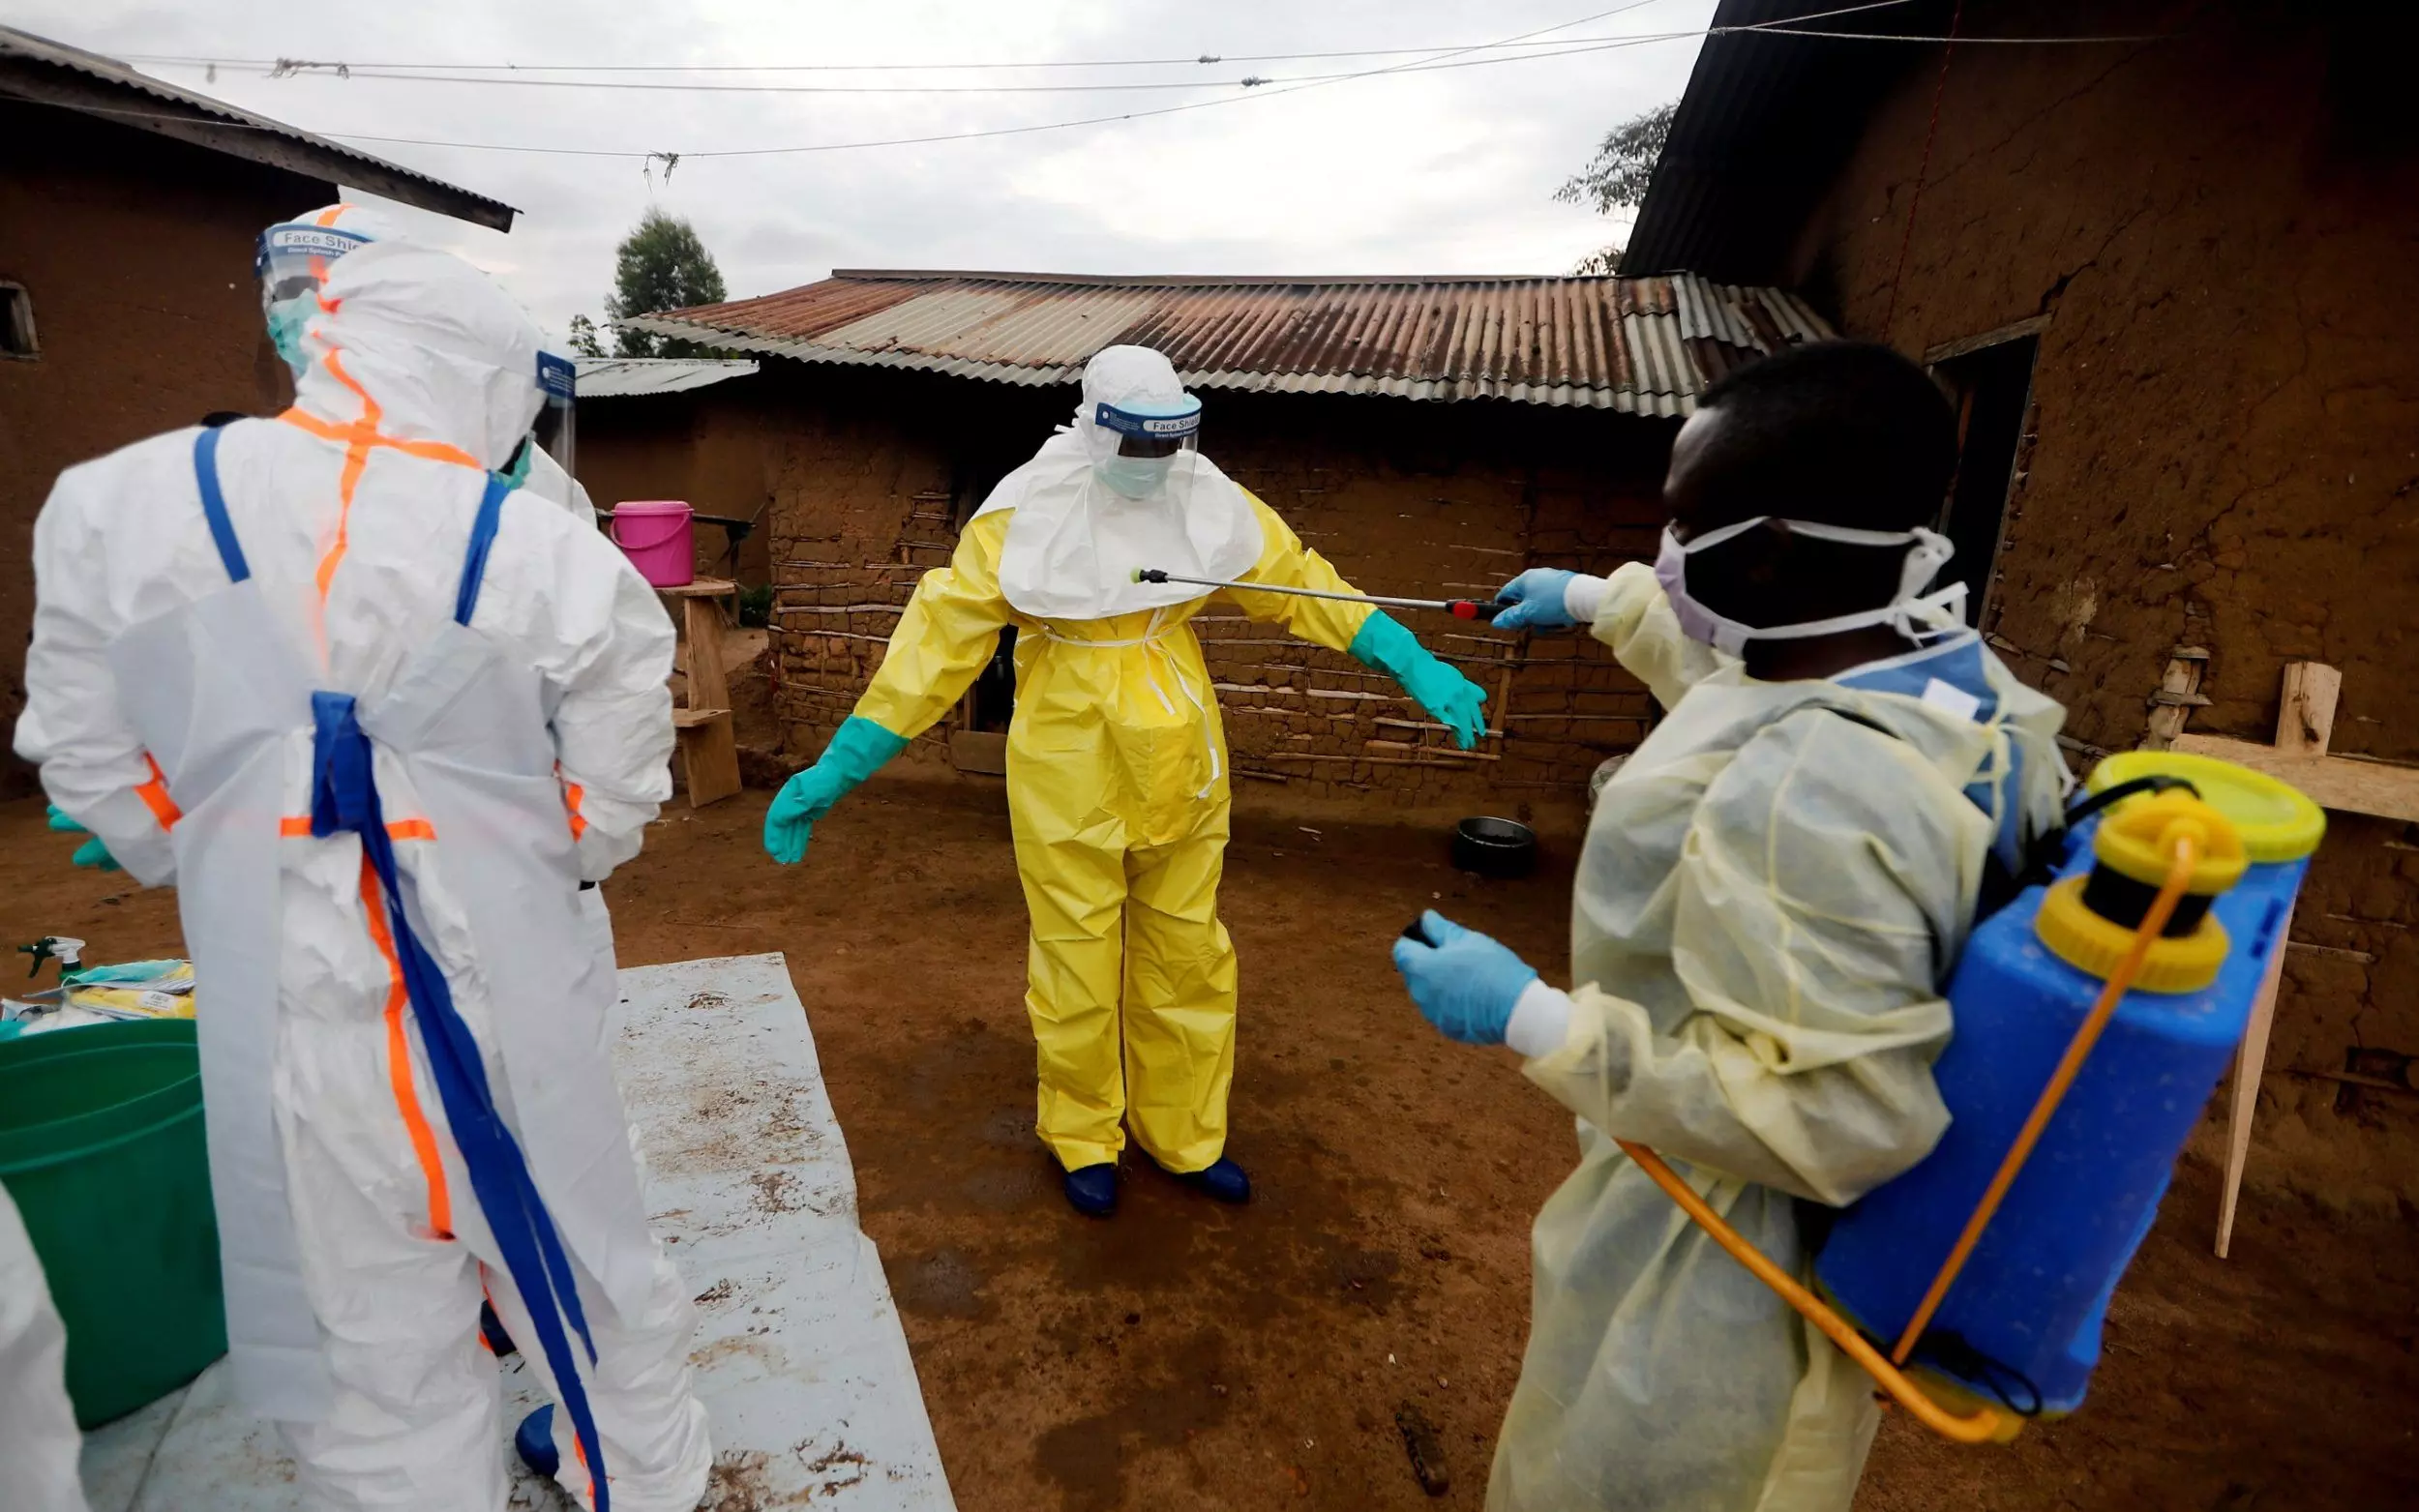 Uganda announces end of Ebola disease outbreak – WHO